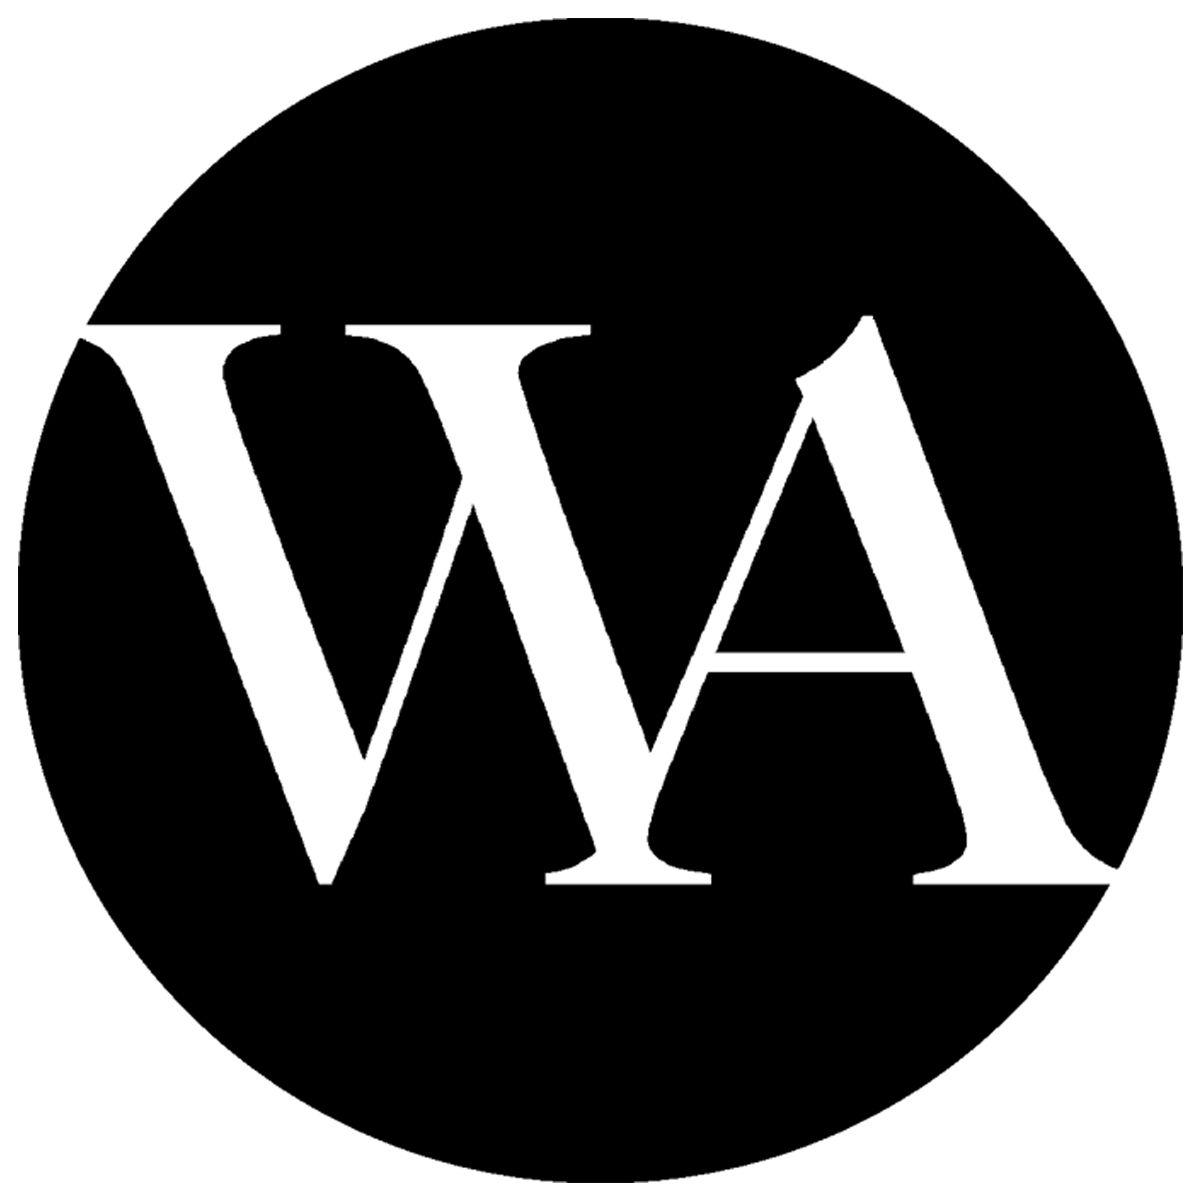 WA Logo - Personable, Masculine, Graphic Designer Logo Design for WA by ...